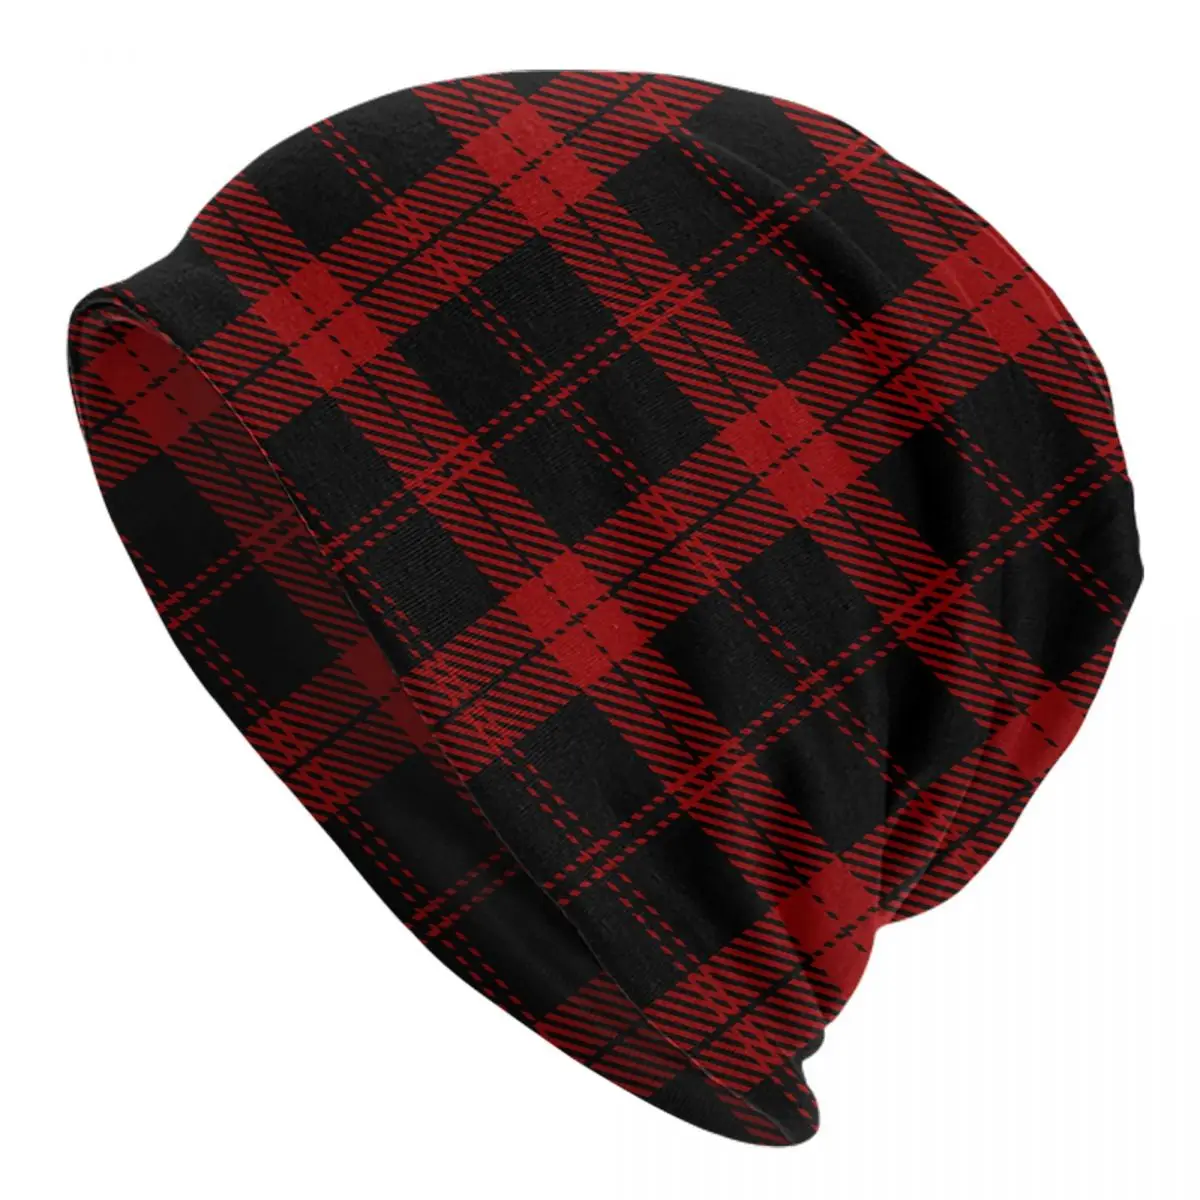 Unisex Casual Hat Black And Red Tartan Plaid Scottish Pattern Cap Winter Warm Beanies Adult Hip Hop Bonnet Hat